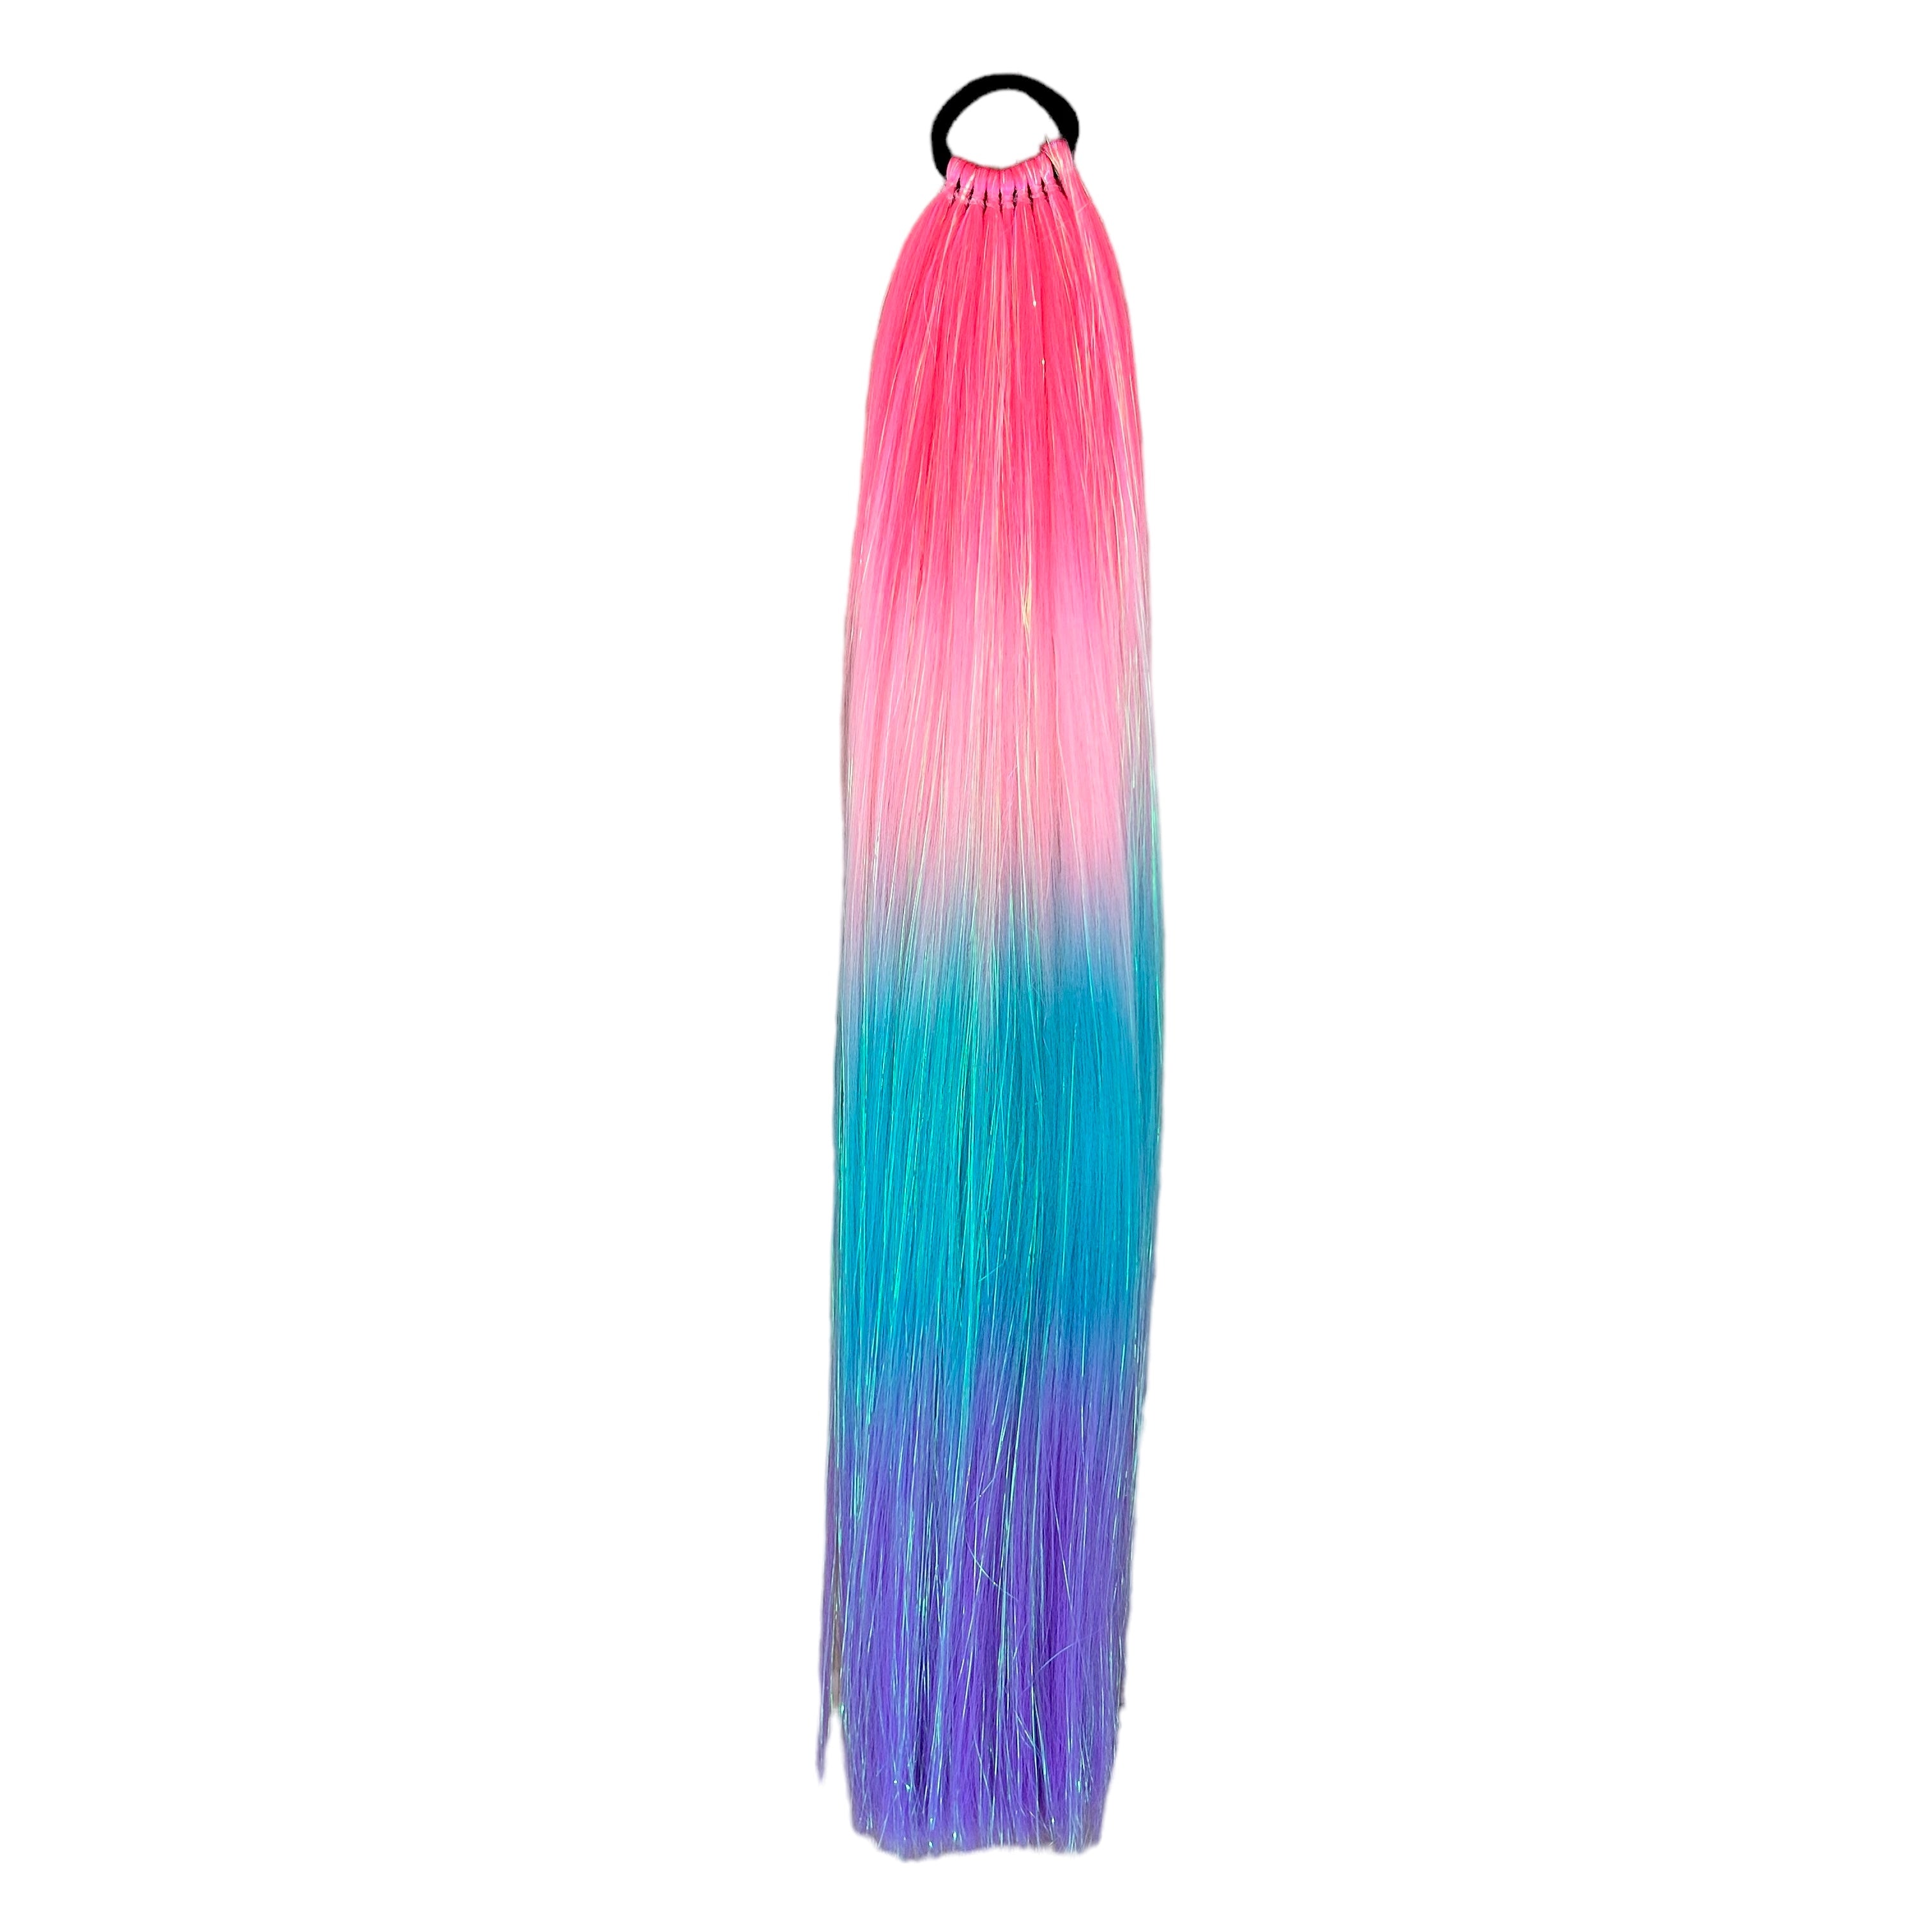 Jumbo hair braid in purple, hot pink and pink – Larzy Pty Ltd